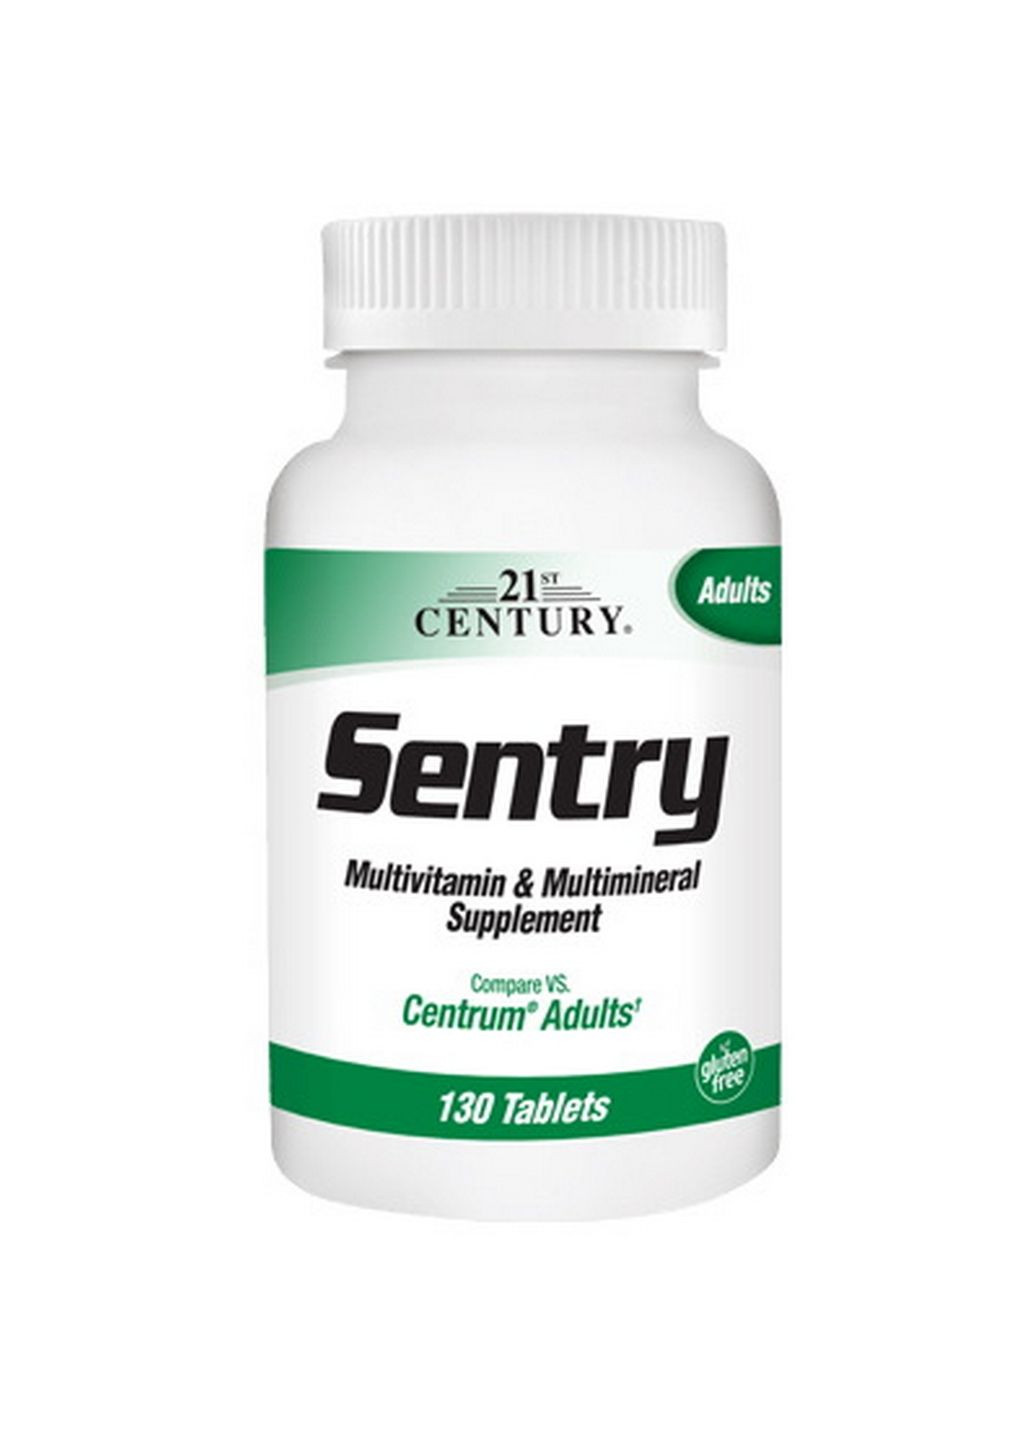 Витамины и минералы Sentry Multivitamin and Multimineral, 130 таблеток 21st Century (293477342)